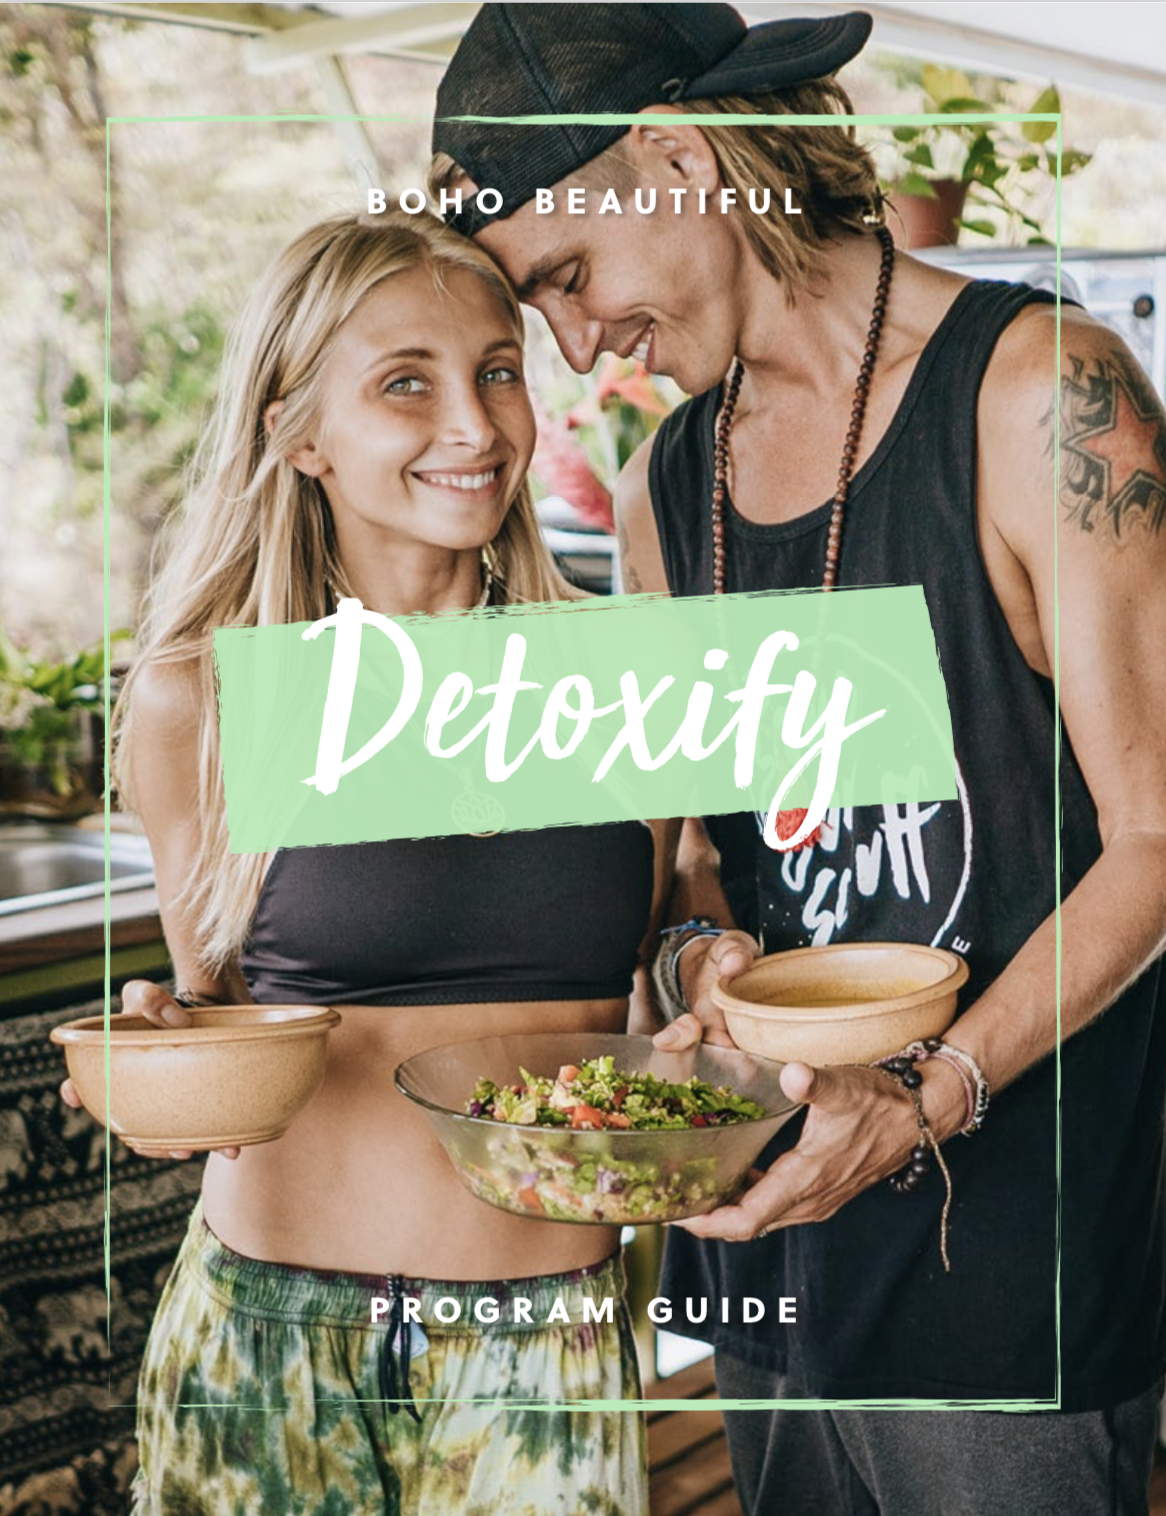 Boho Beautiful Detoxify Program Guide